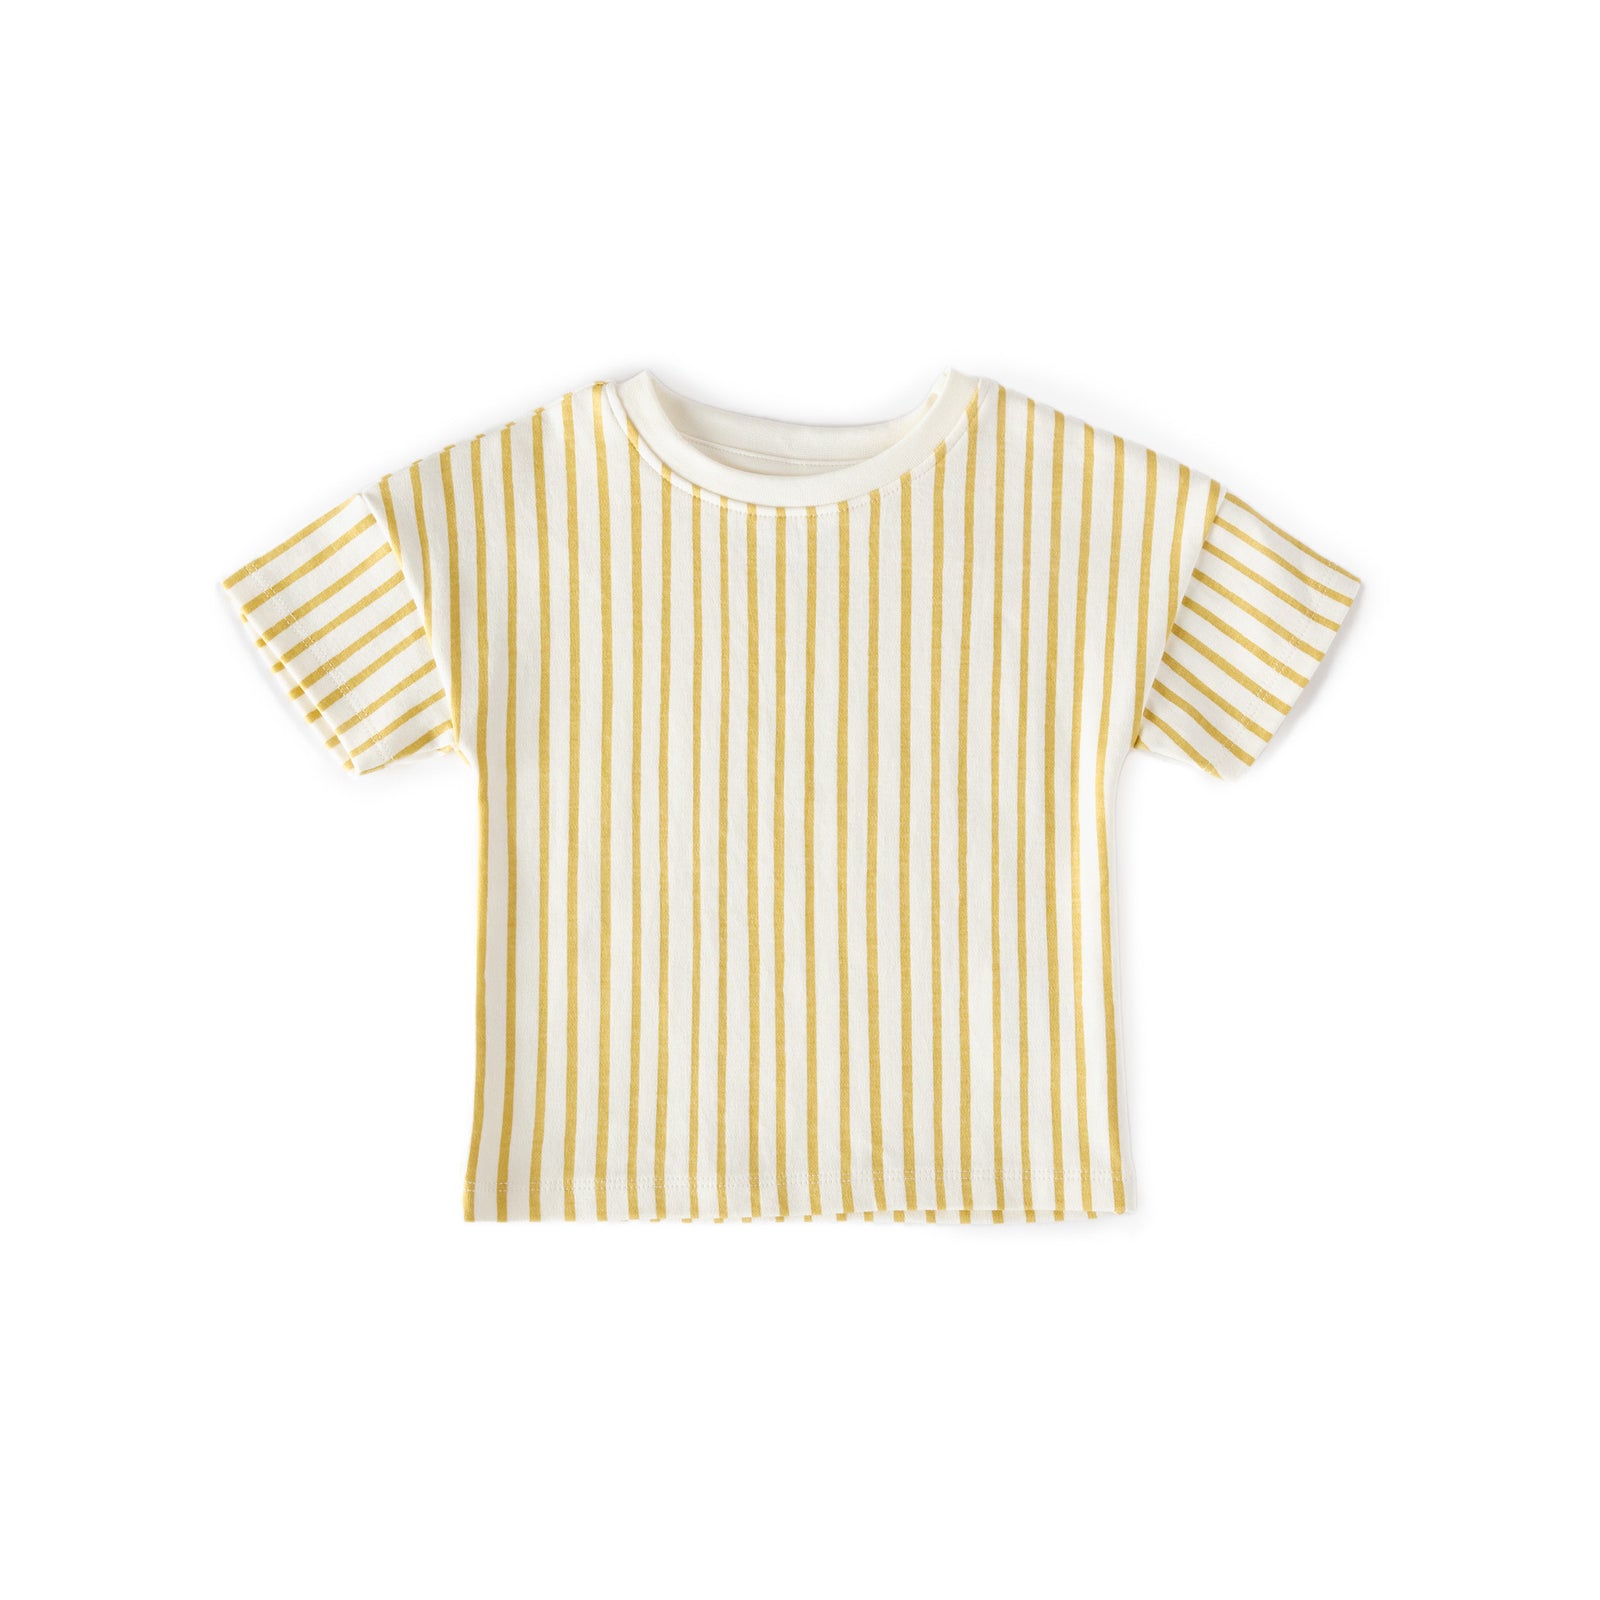 Dropped Shoulder T-Shirt Top Pehr Canada Stripes Away Marigold 18 - 24 mos. 